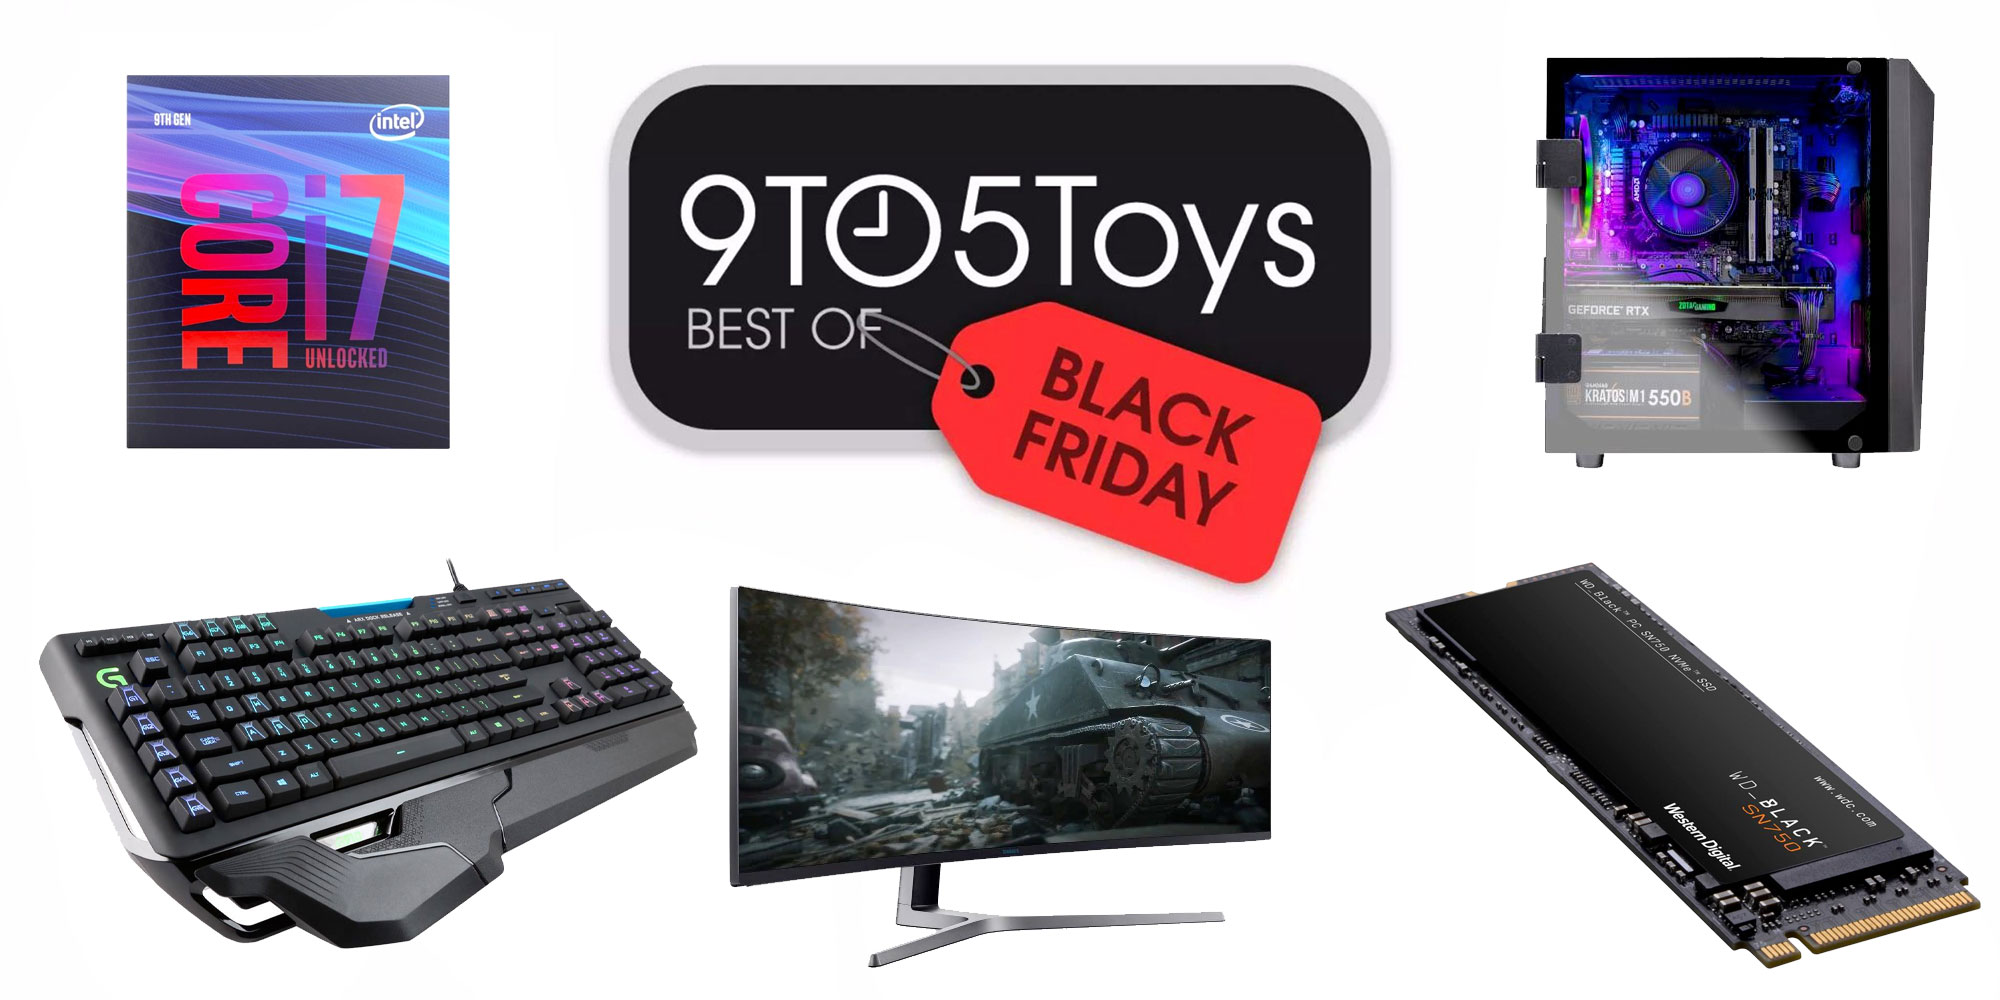 Black Friday PC gaming peripherals deals -  news